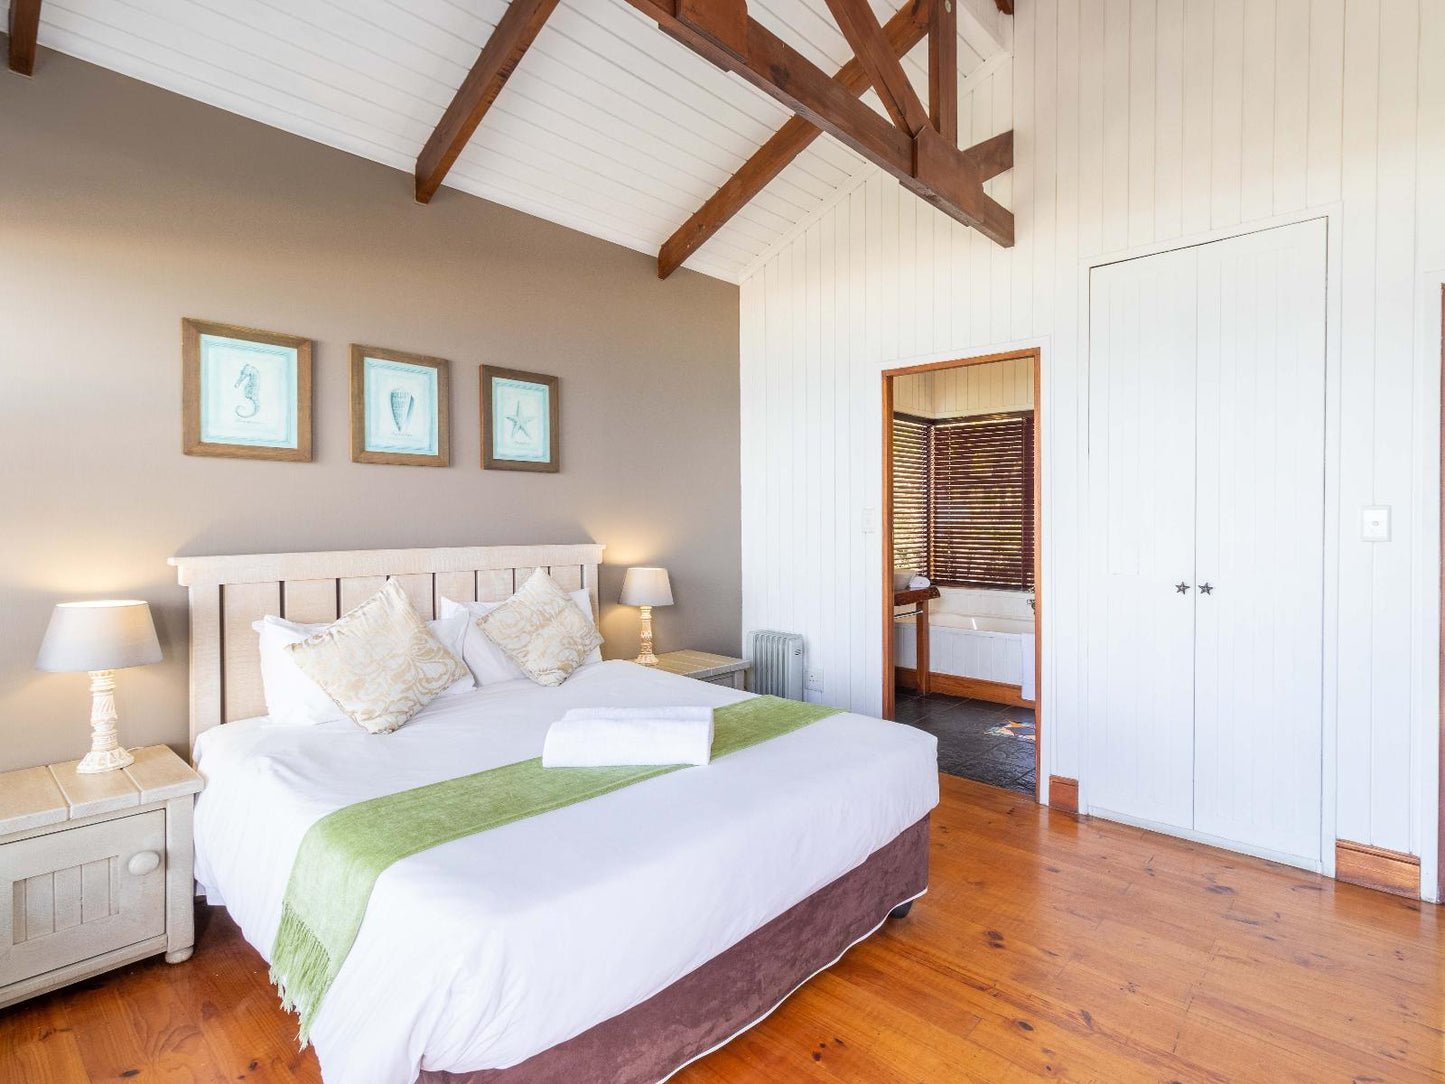 1 Bedroom Simplex Chalet - Sea Facing @ Boardwalk Lodge - Self Catering